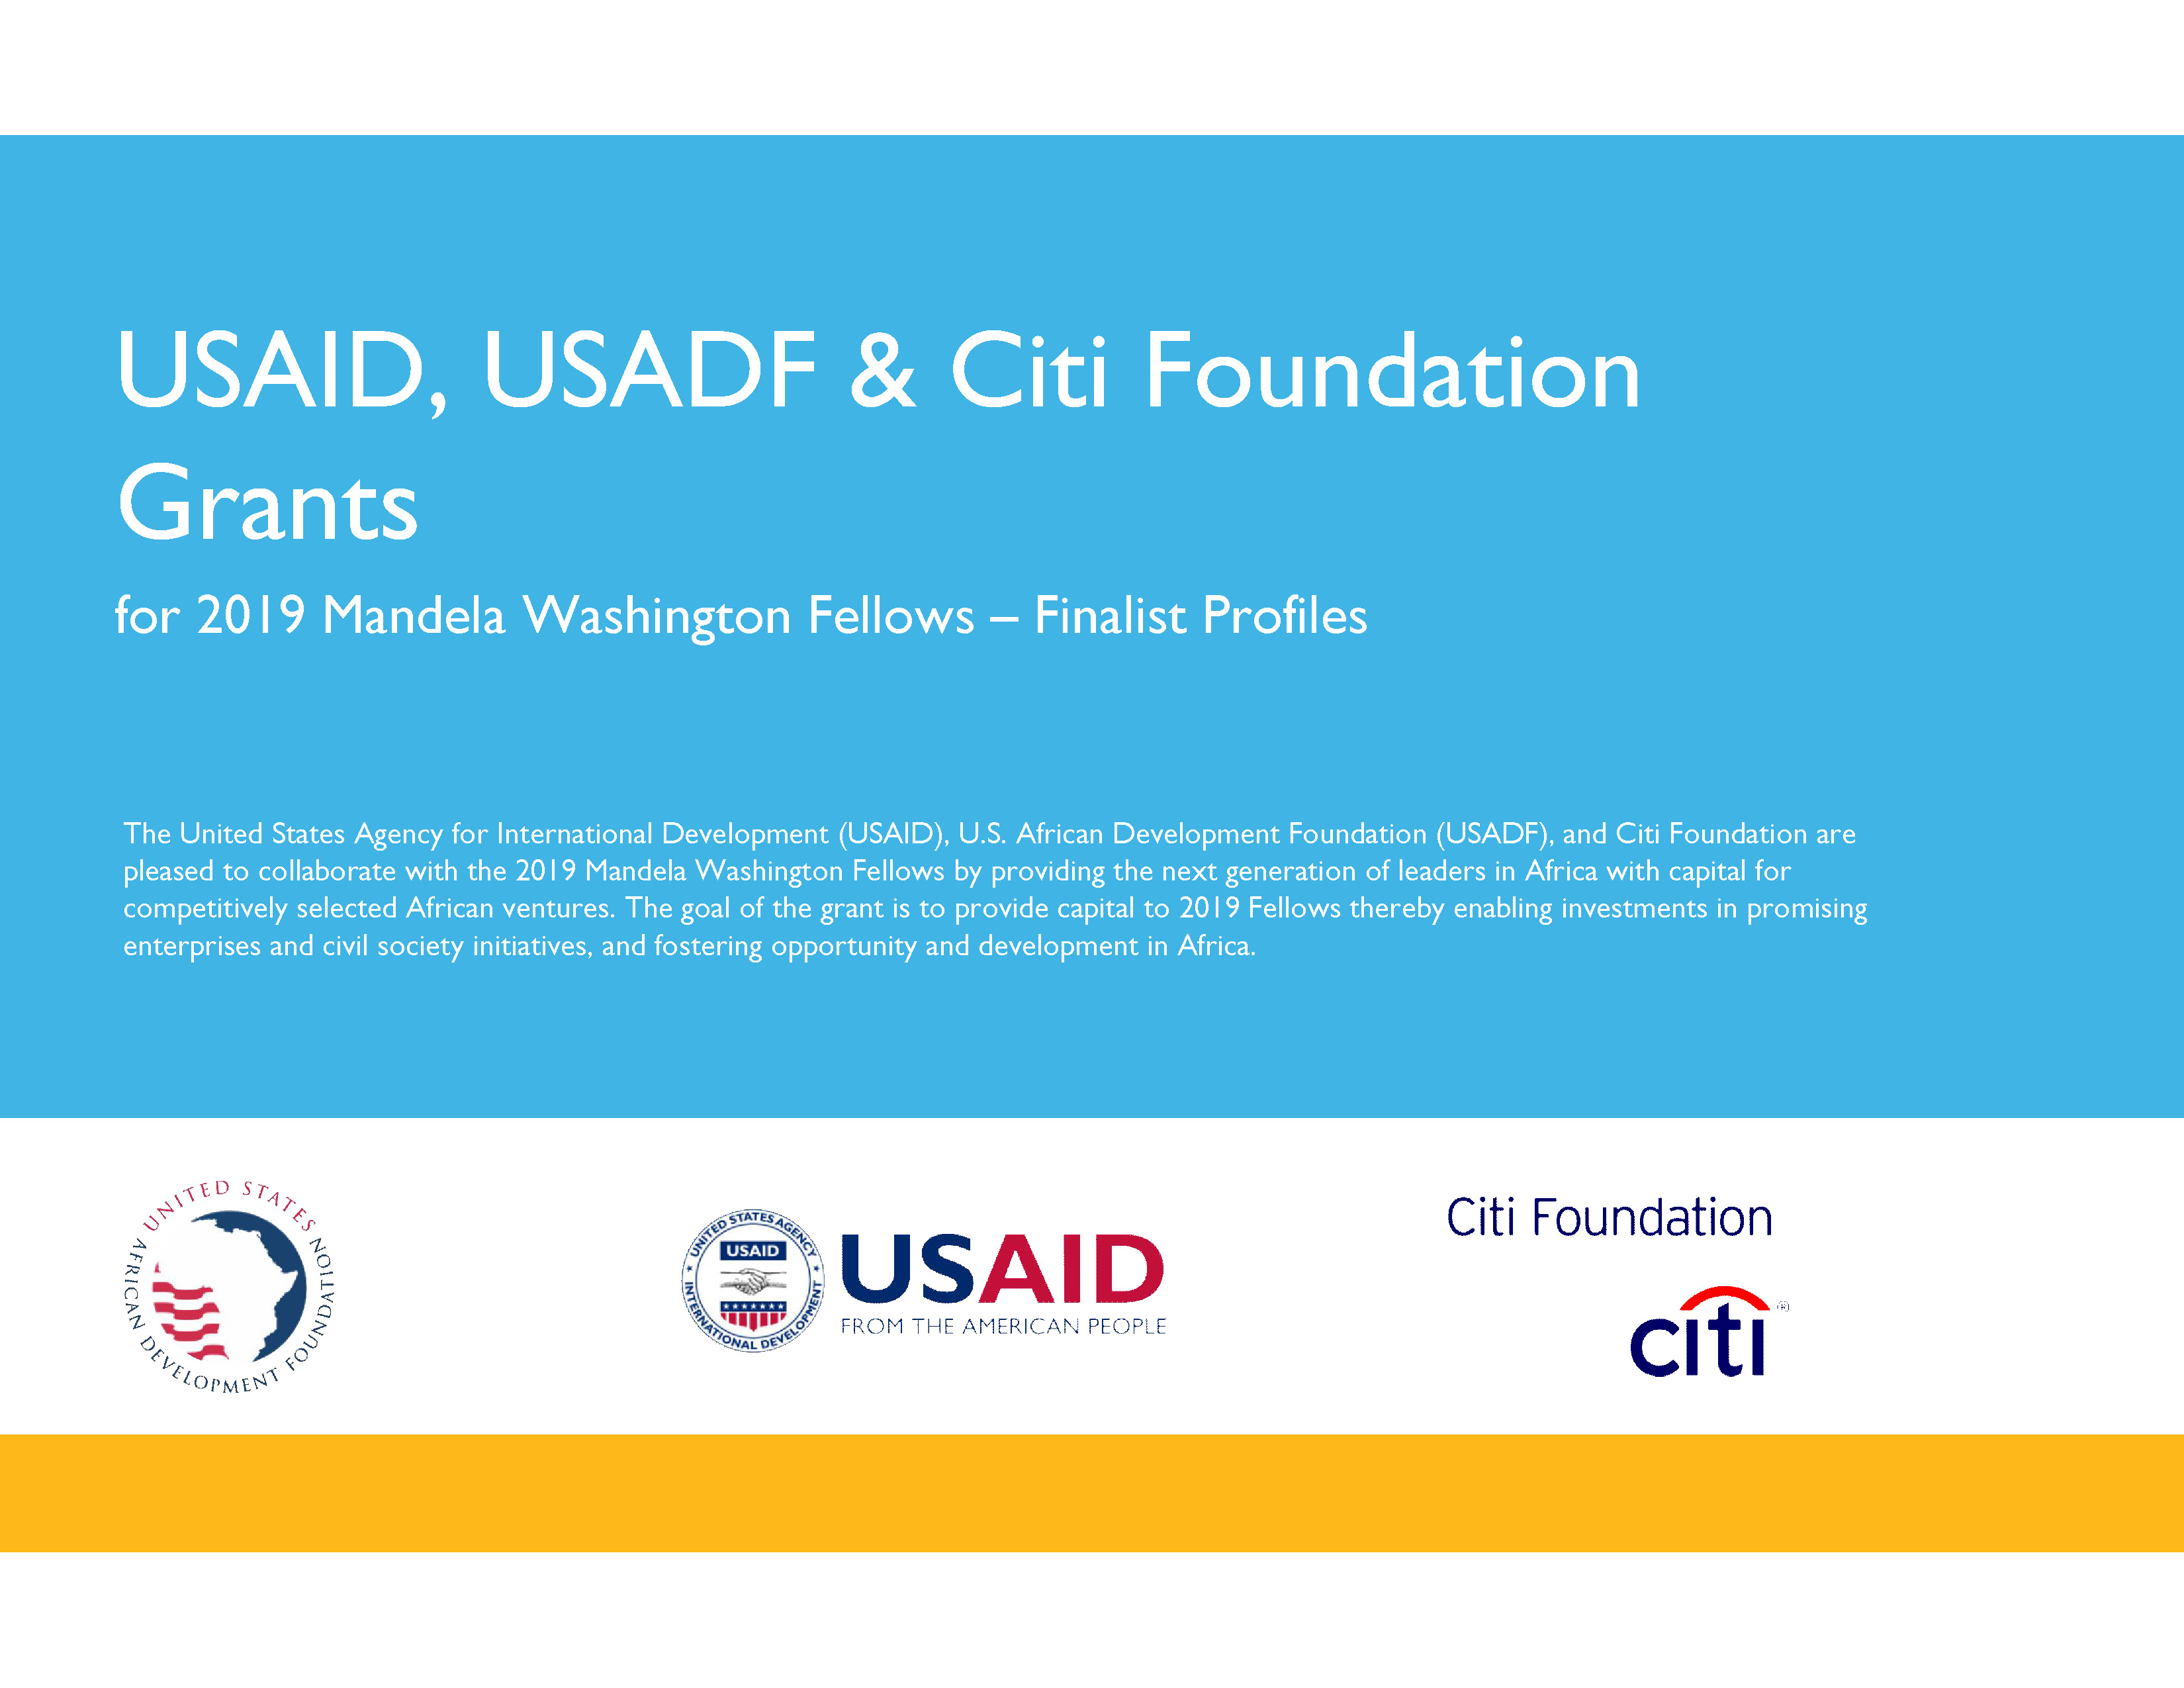 USAID, USADF, Citi Foundation Grant Finalist Profiles